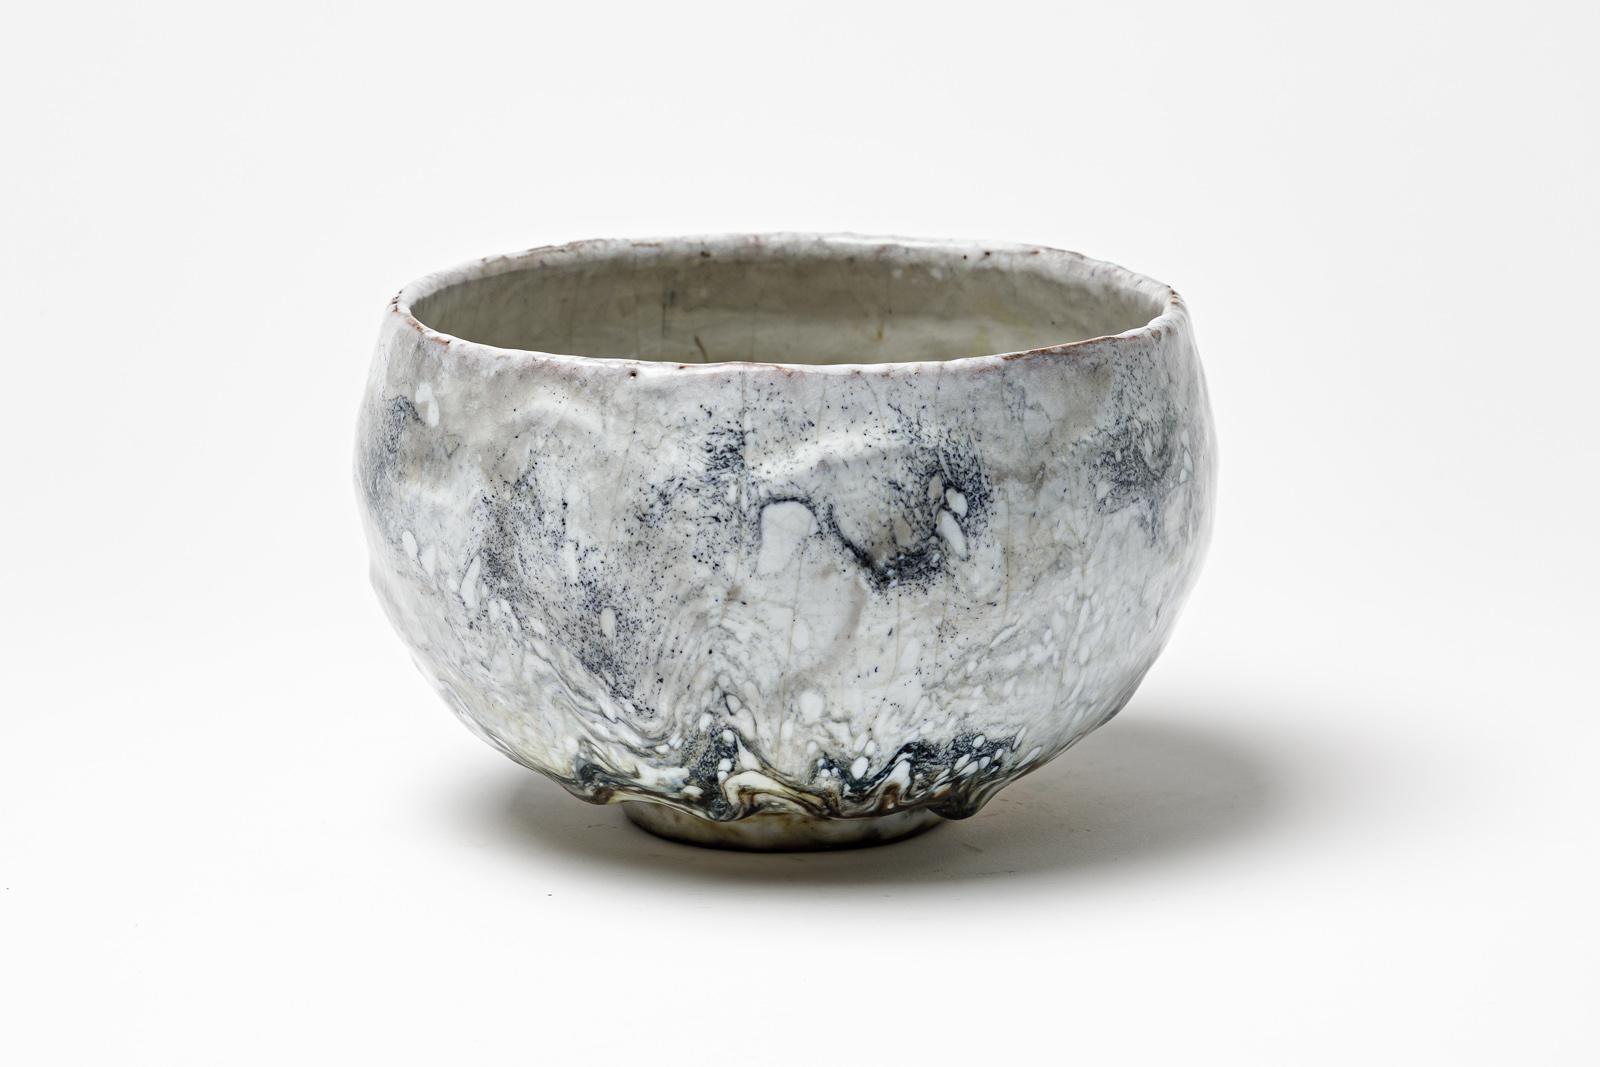 White/grey and pearly beige glazed ceramic bowl by Gisèle Buthod Garçon. Raku fired. Artist monogram under the base. Circa 1980-1990.
H : 4.3’ x 6.7’ inches.